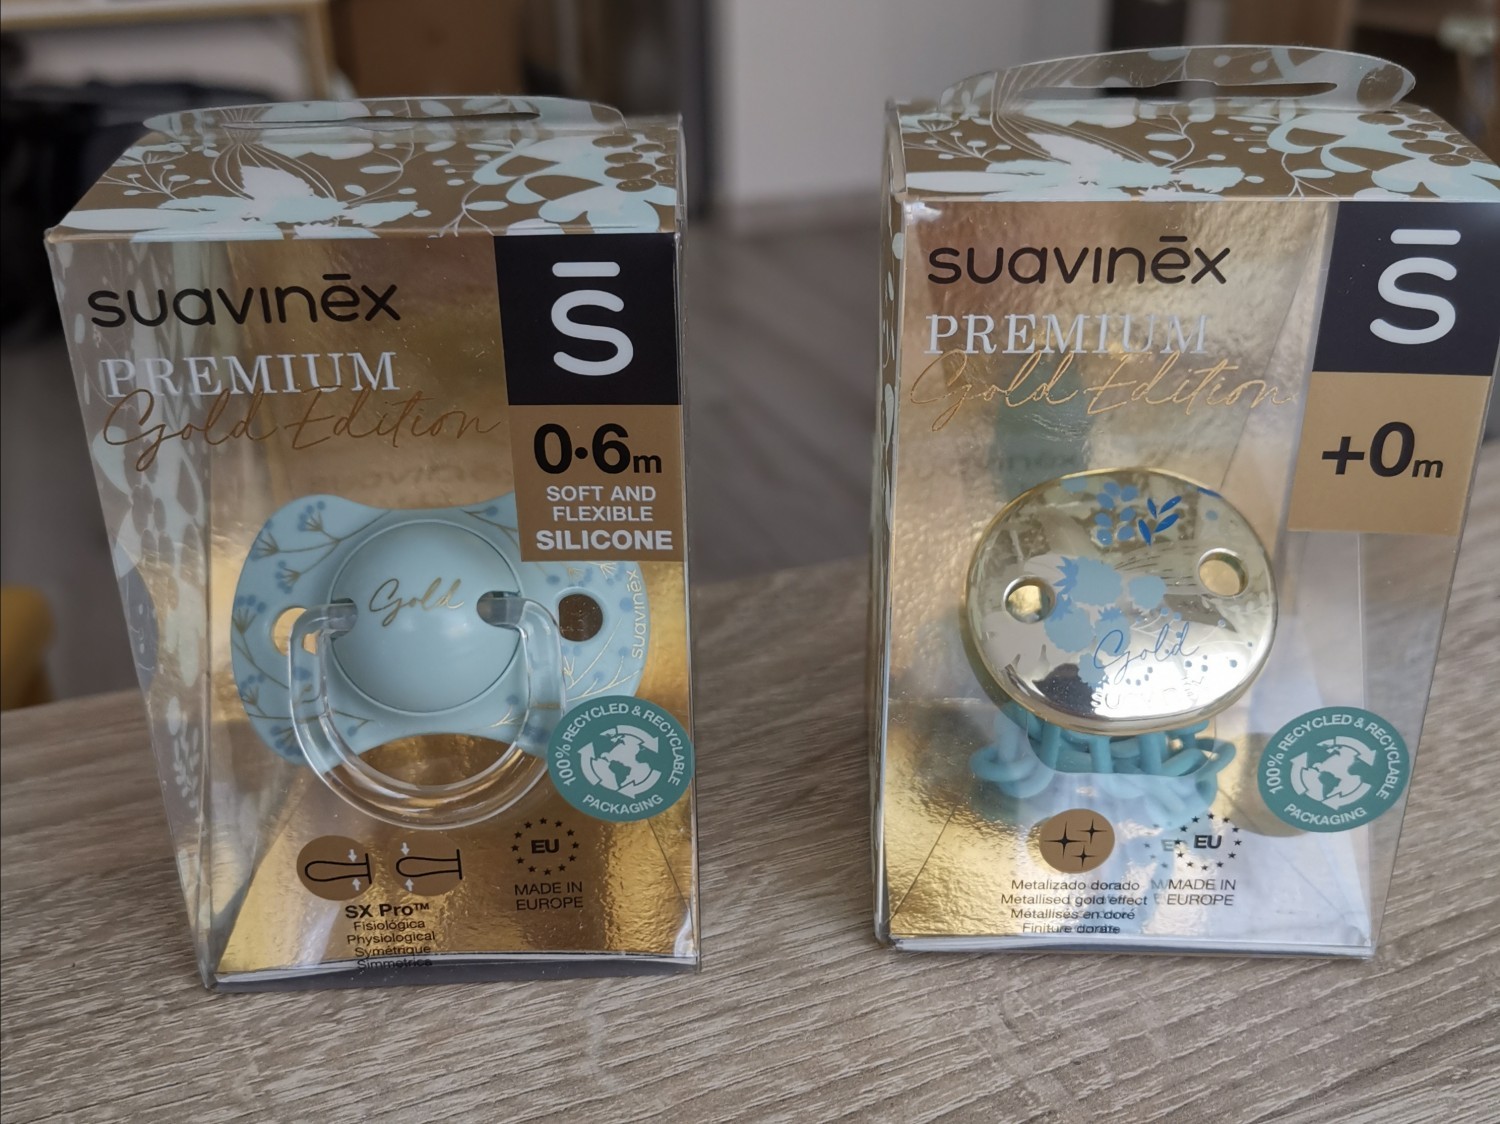 Suavinex 0-6 gold edition